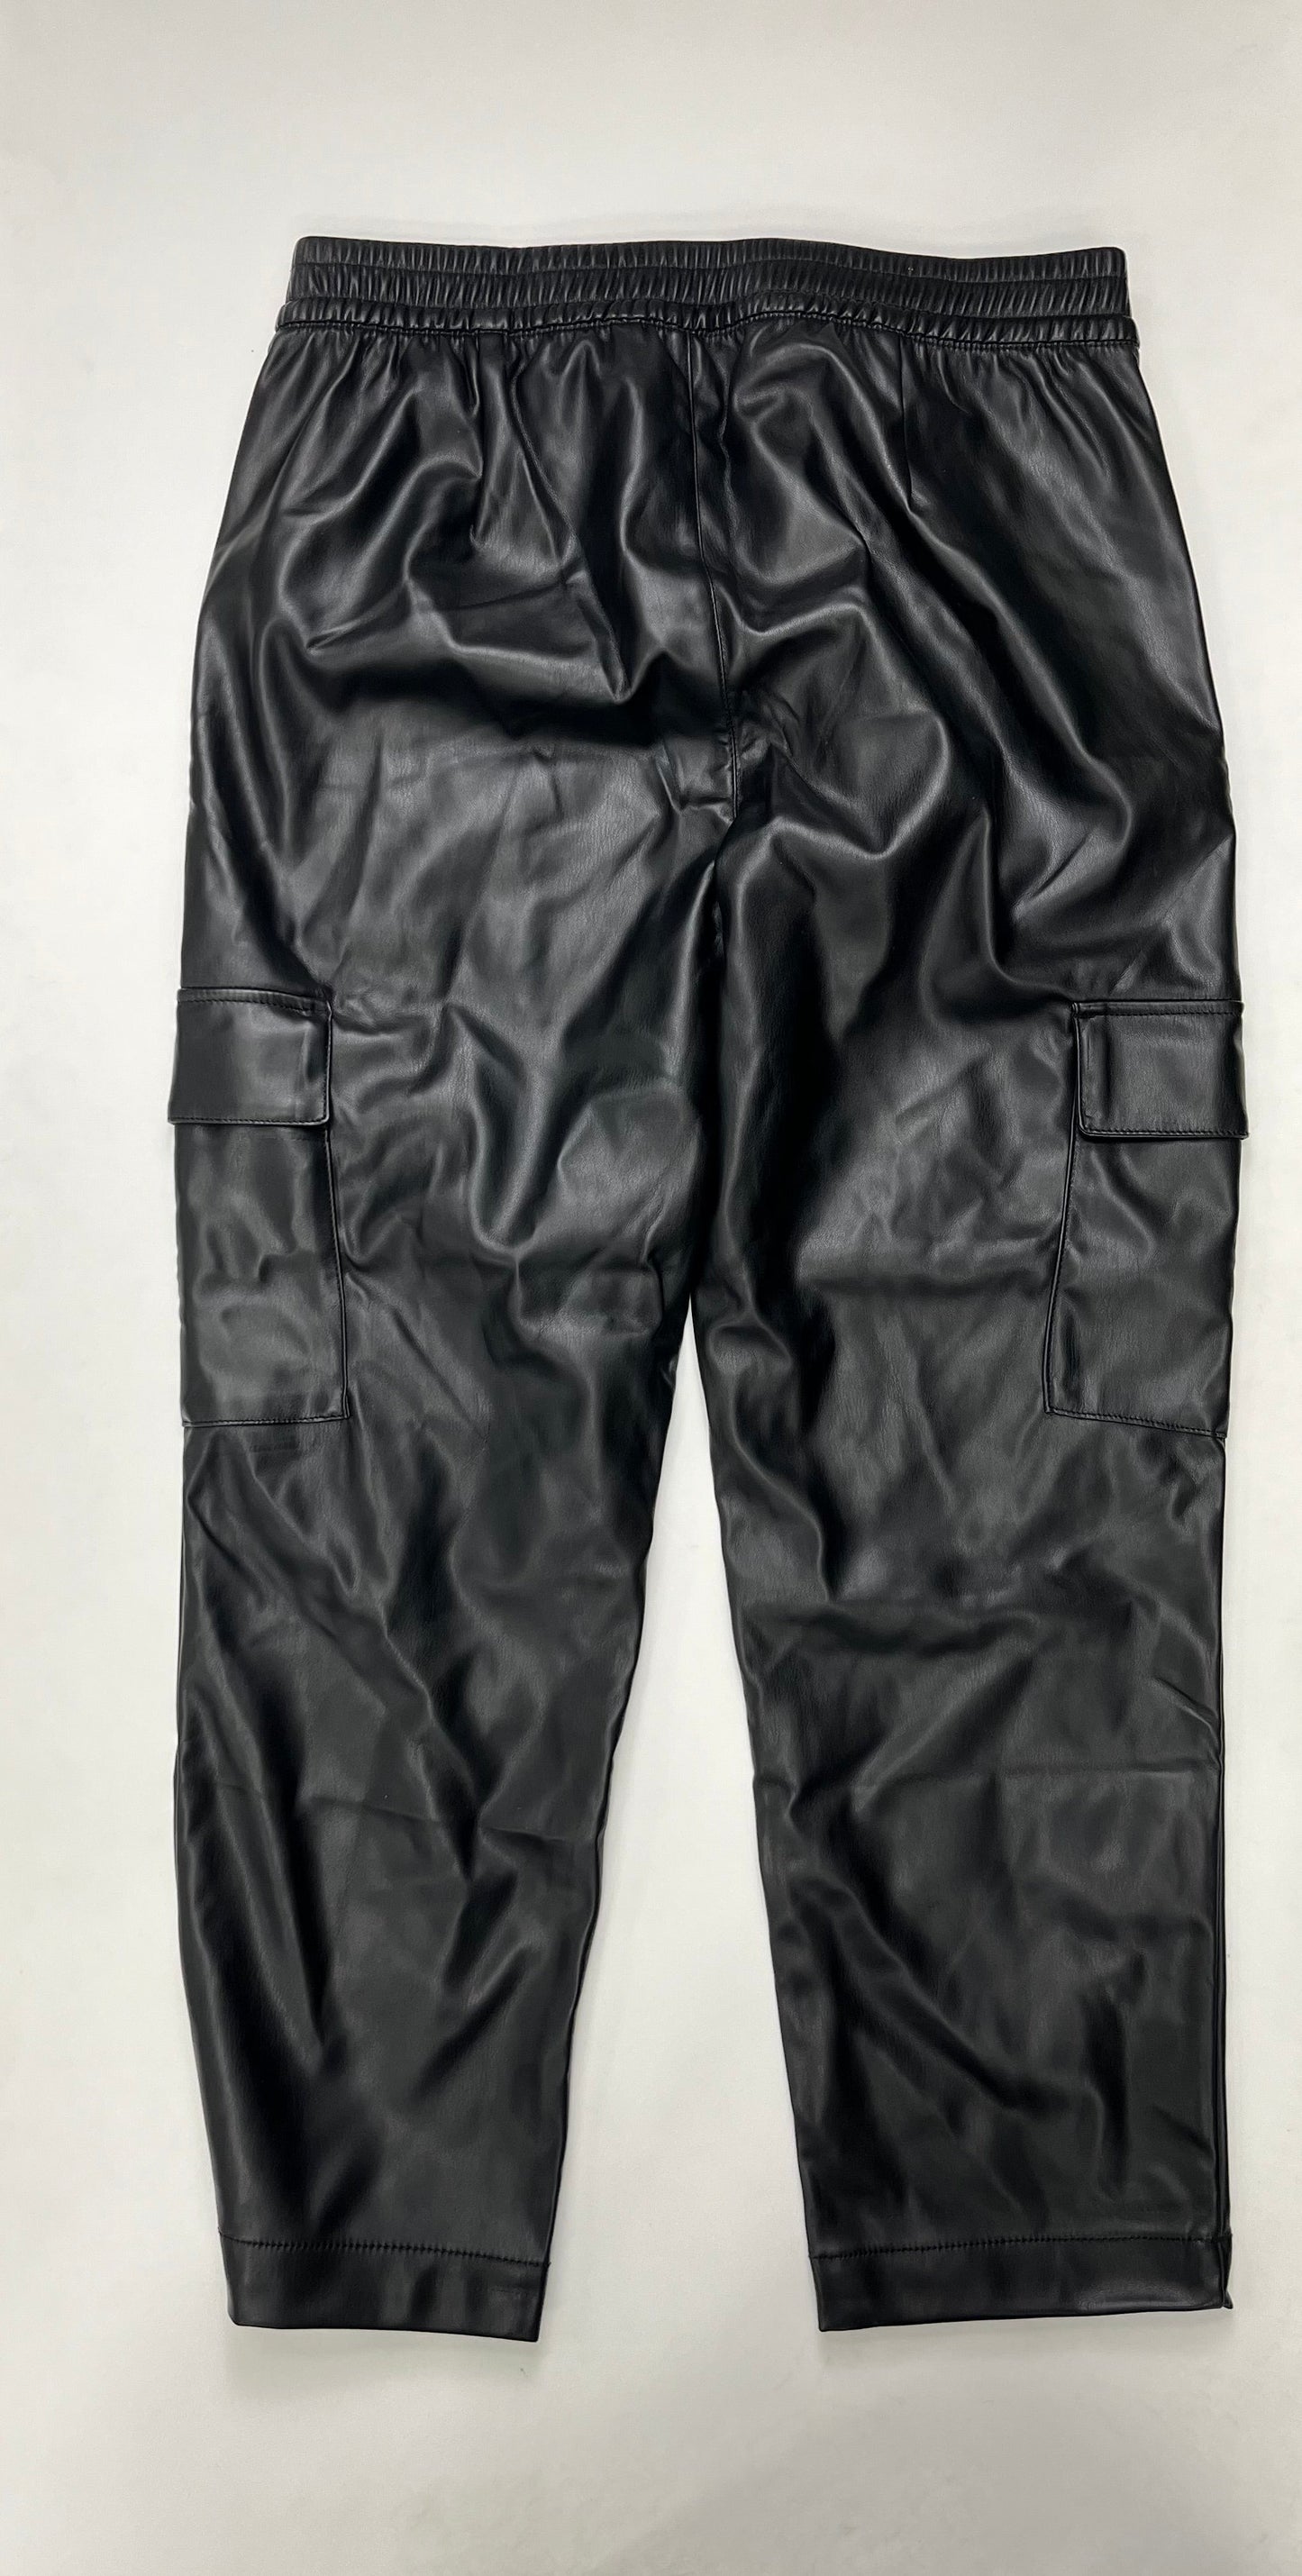 Black Pants Cargo & Utility Gap NWT, Size 16